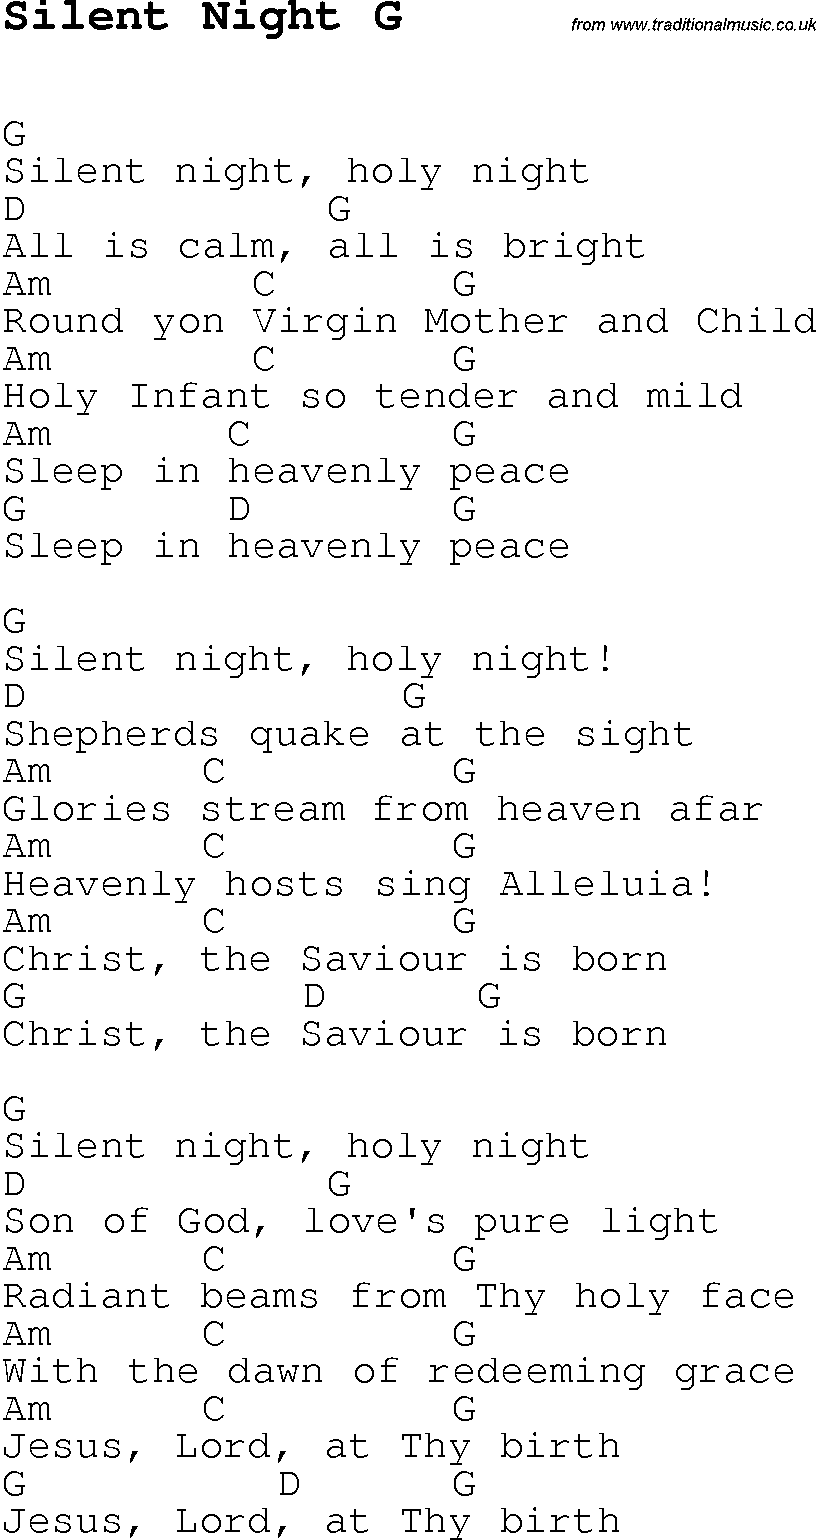 Christmas Carol/Song lyrics with chords for Silent Night G